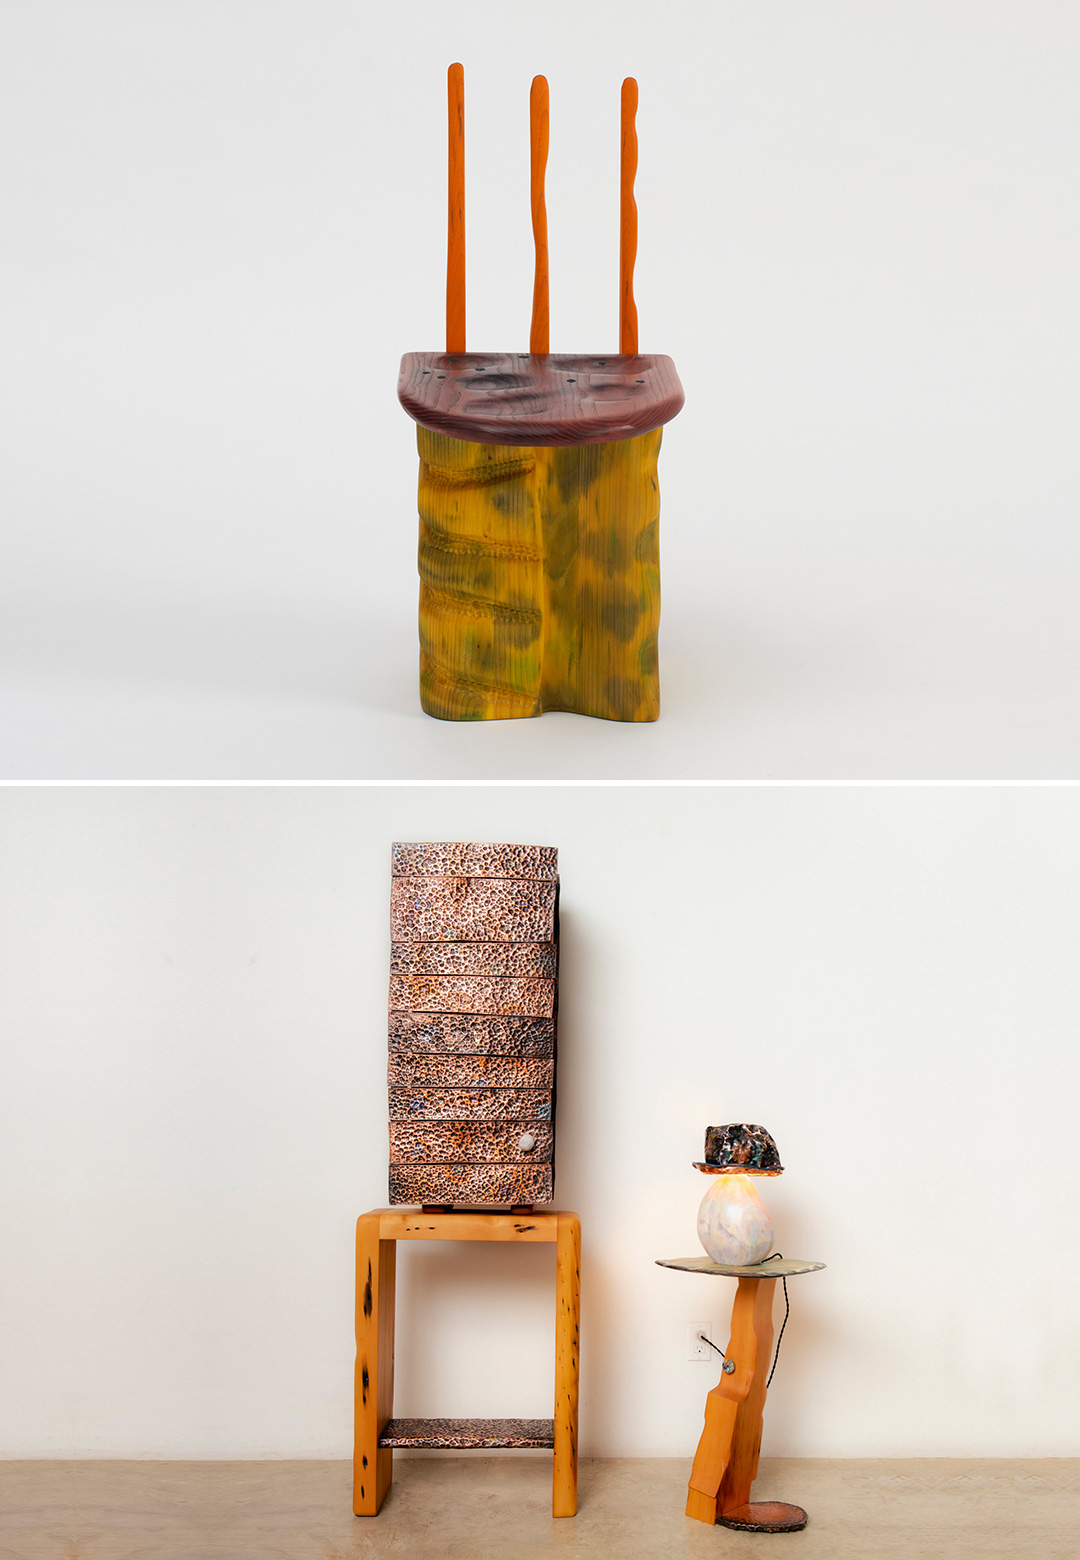 Luke Malaney’s uncanny furniture designs are born from his surreal imagination